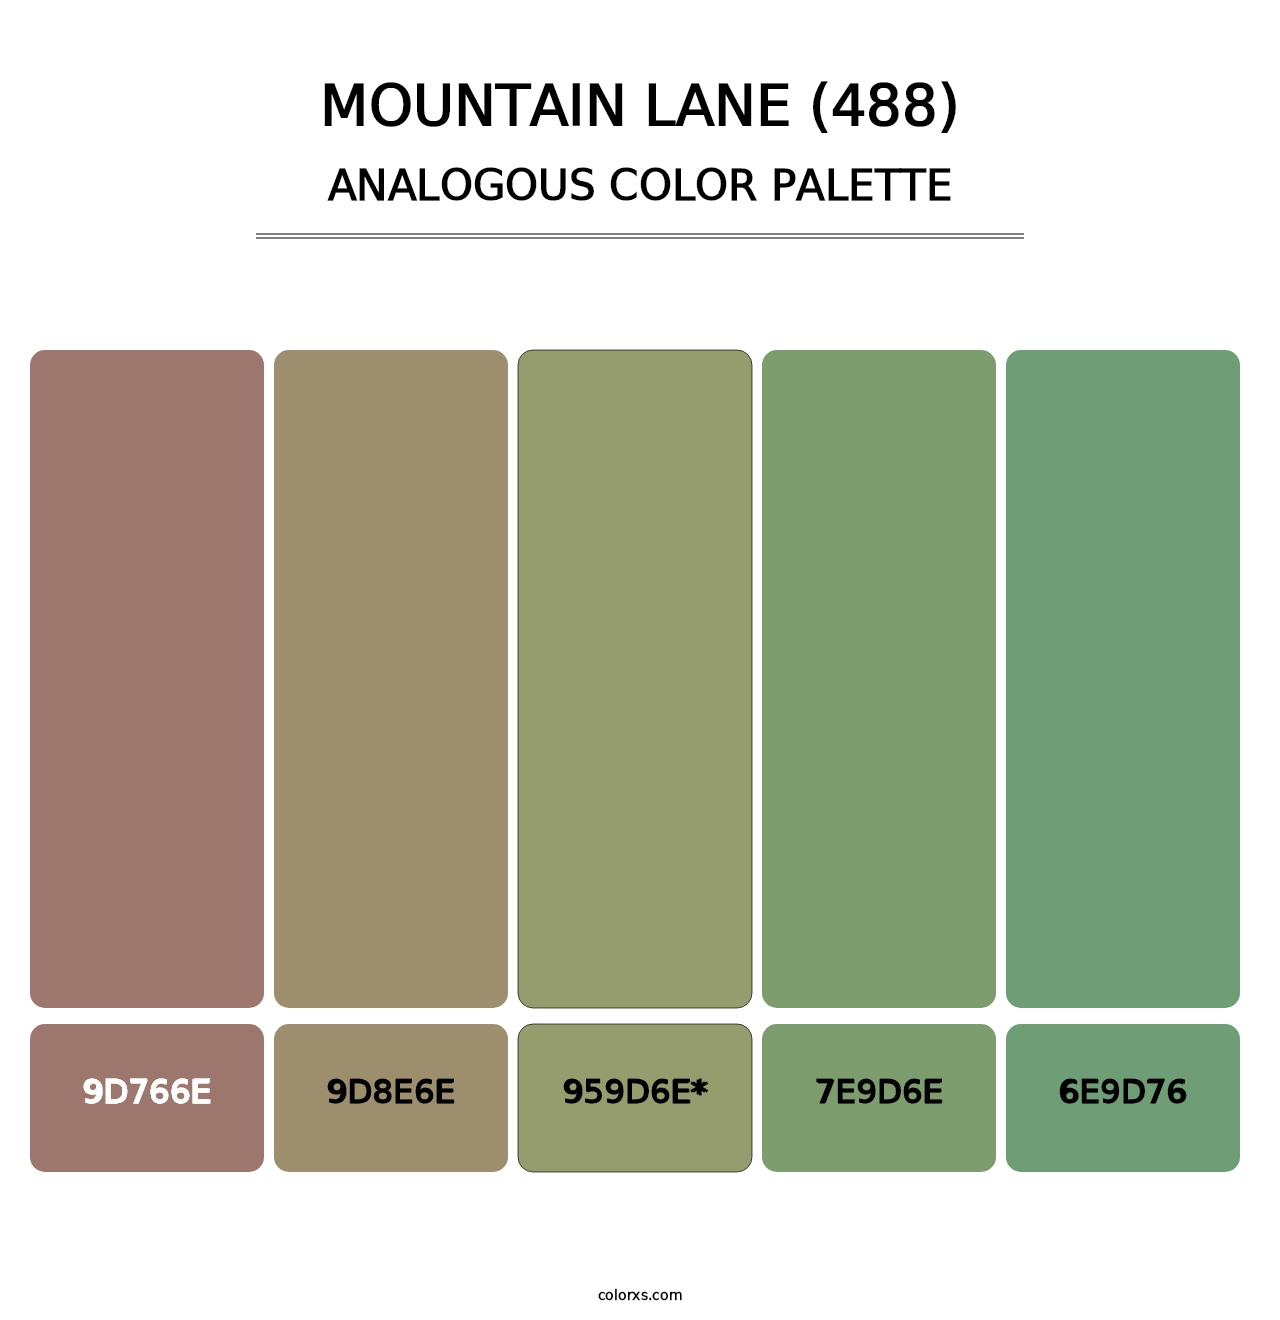 Mountain Lane (488) - Analogous Color Palette